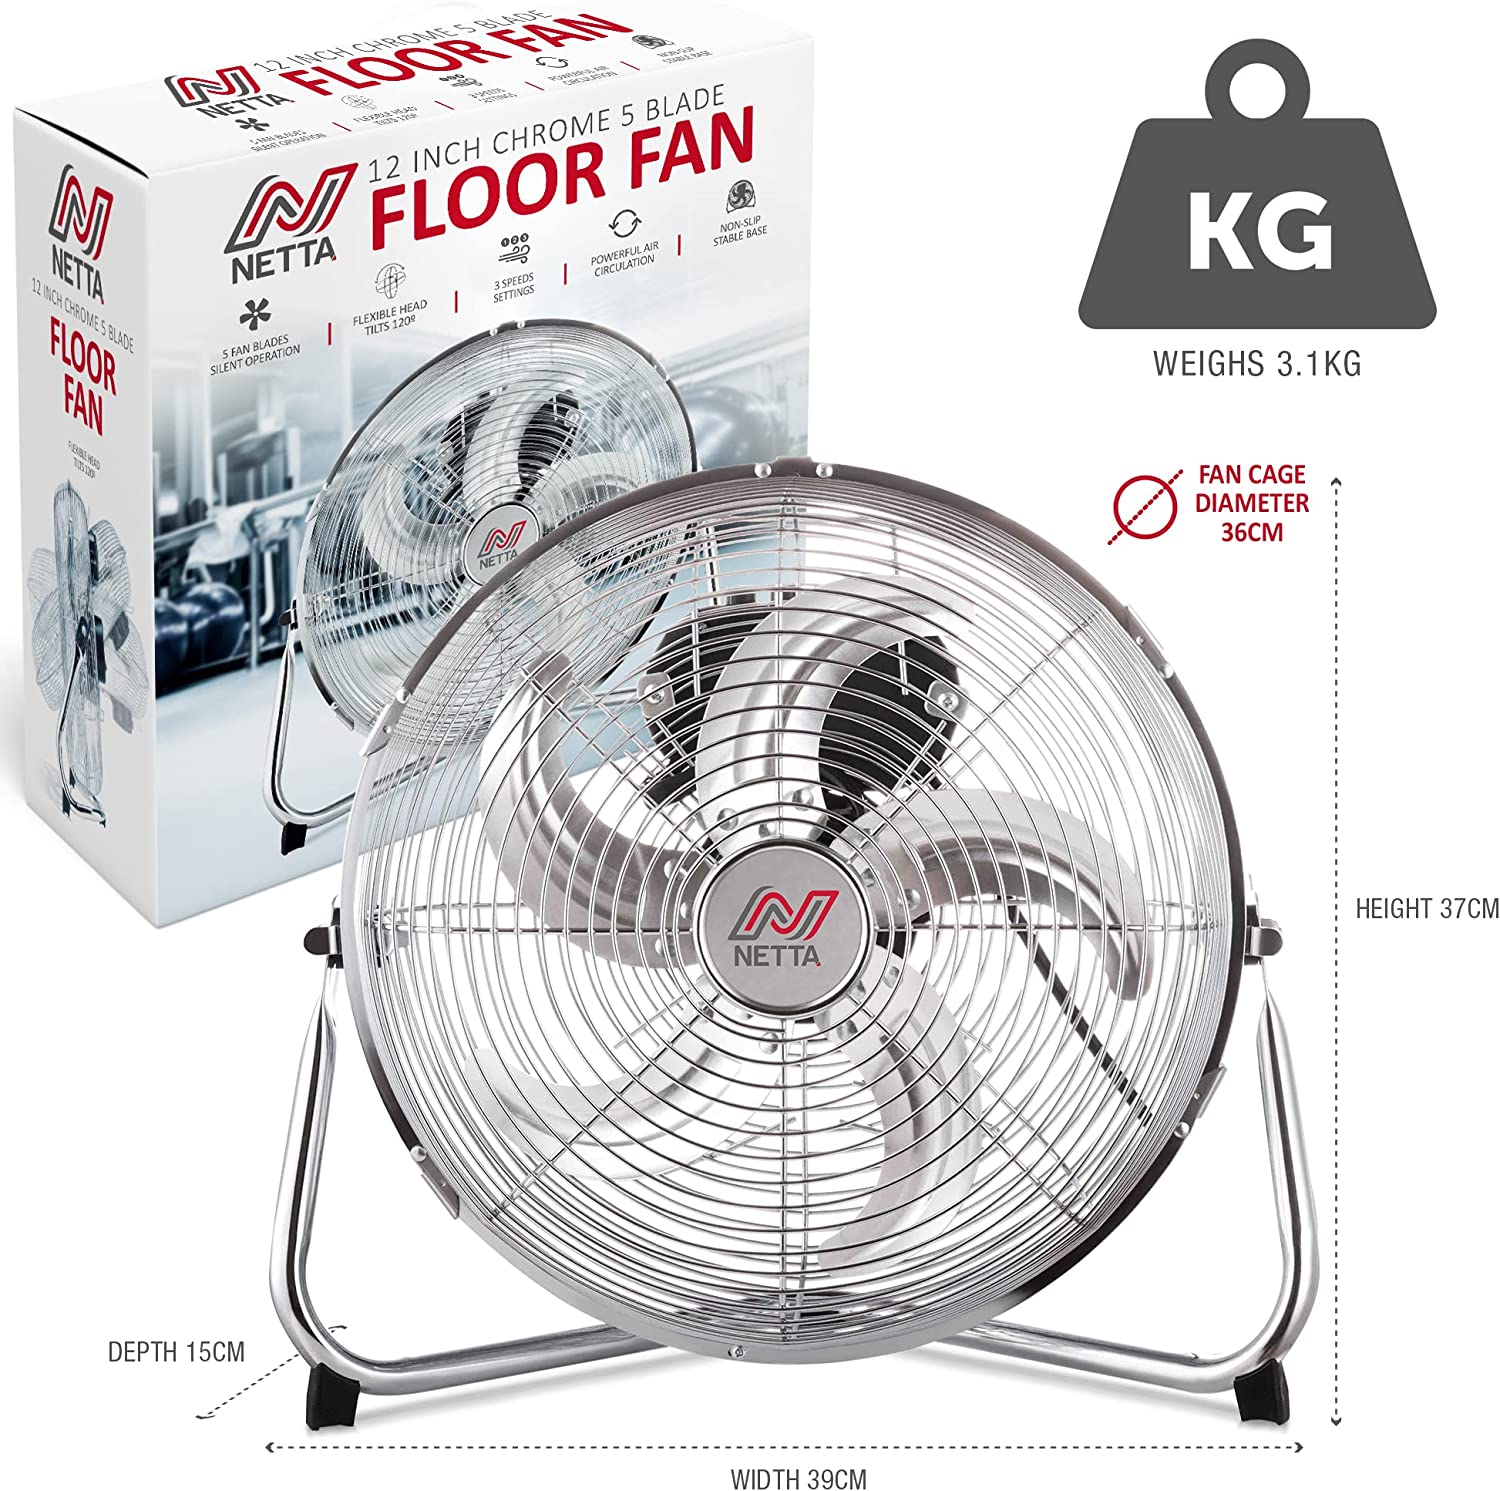 NETTA 12 Inch Gym Floor Fan – Chrome